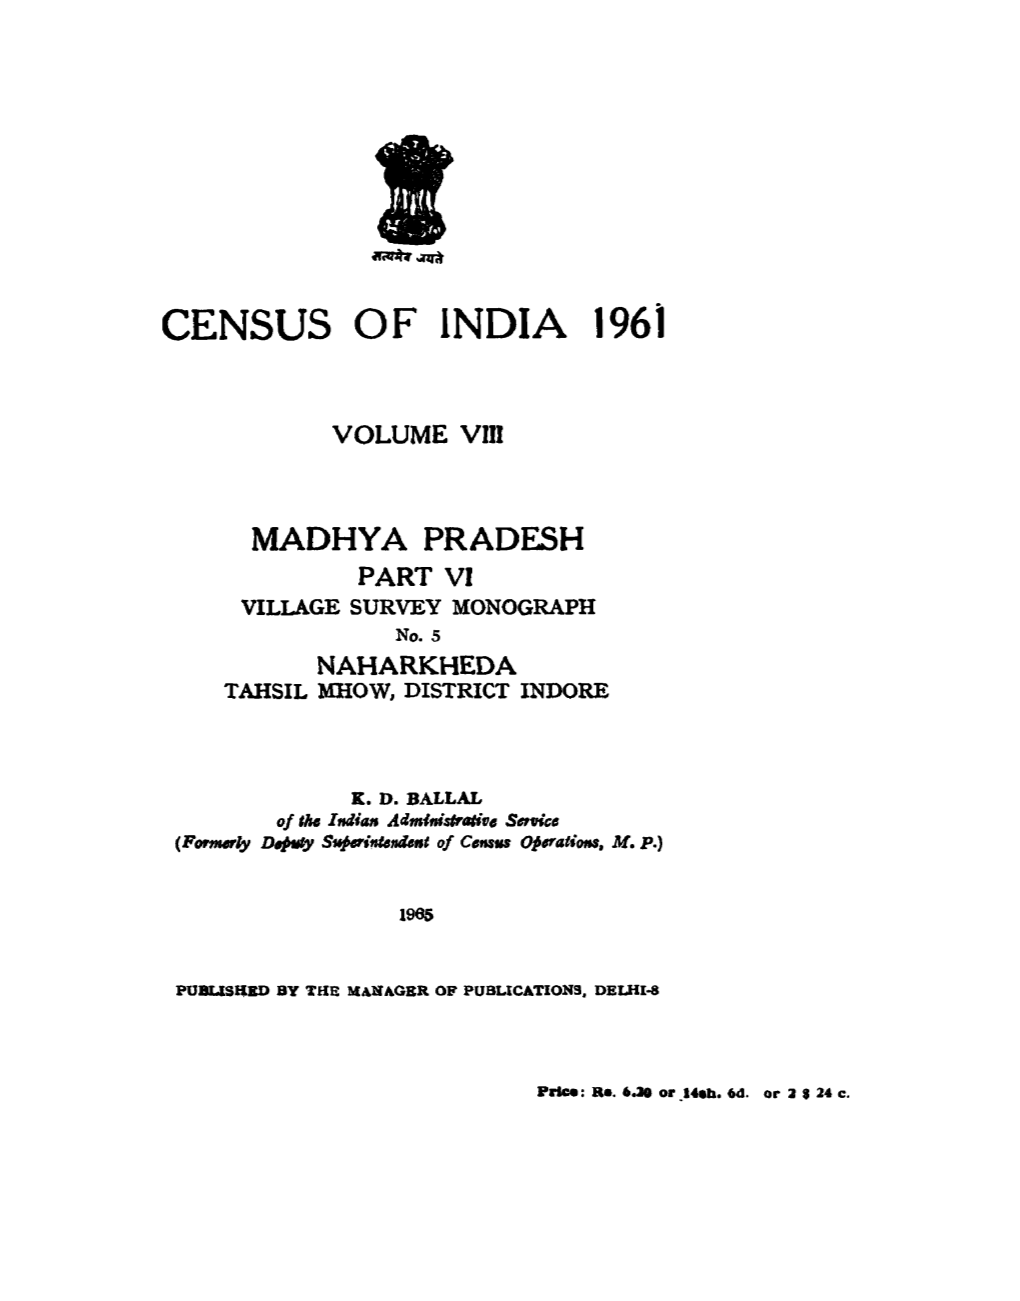 Village Survey Monograph, No-5 Naharkheda, Part VI, Vol-VII